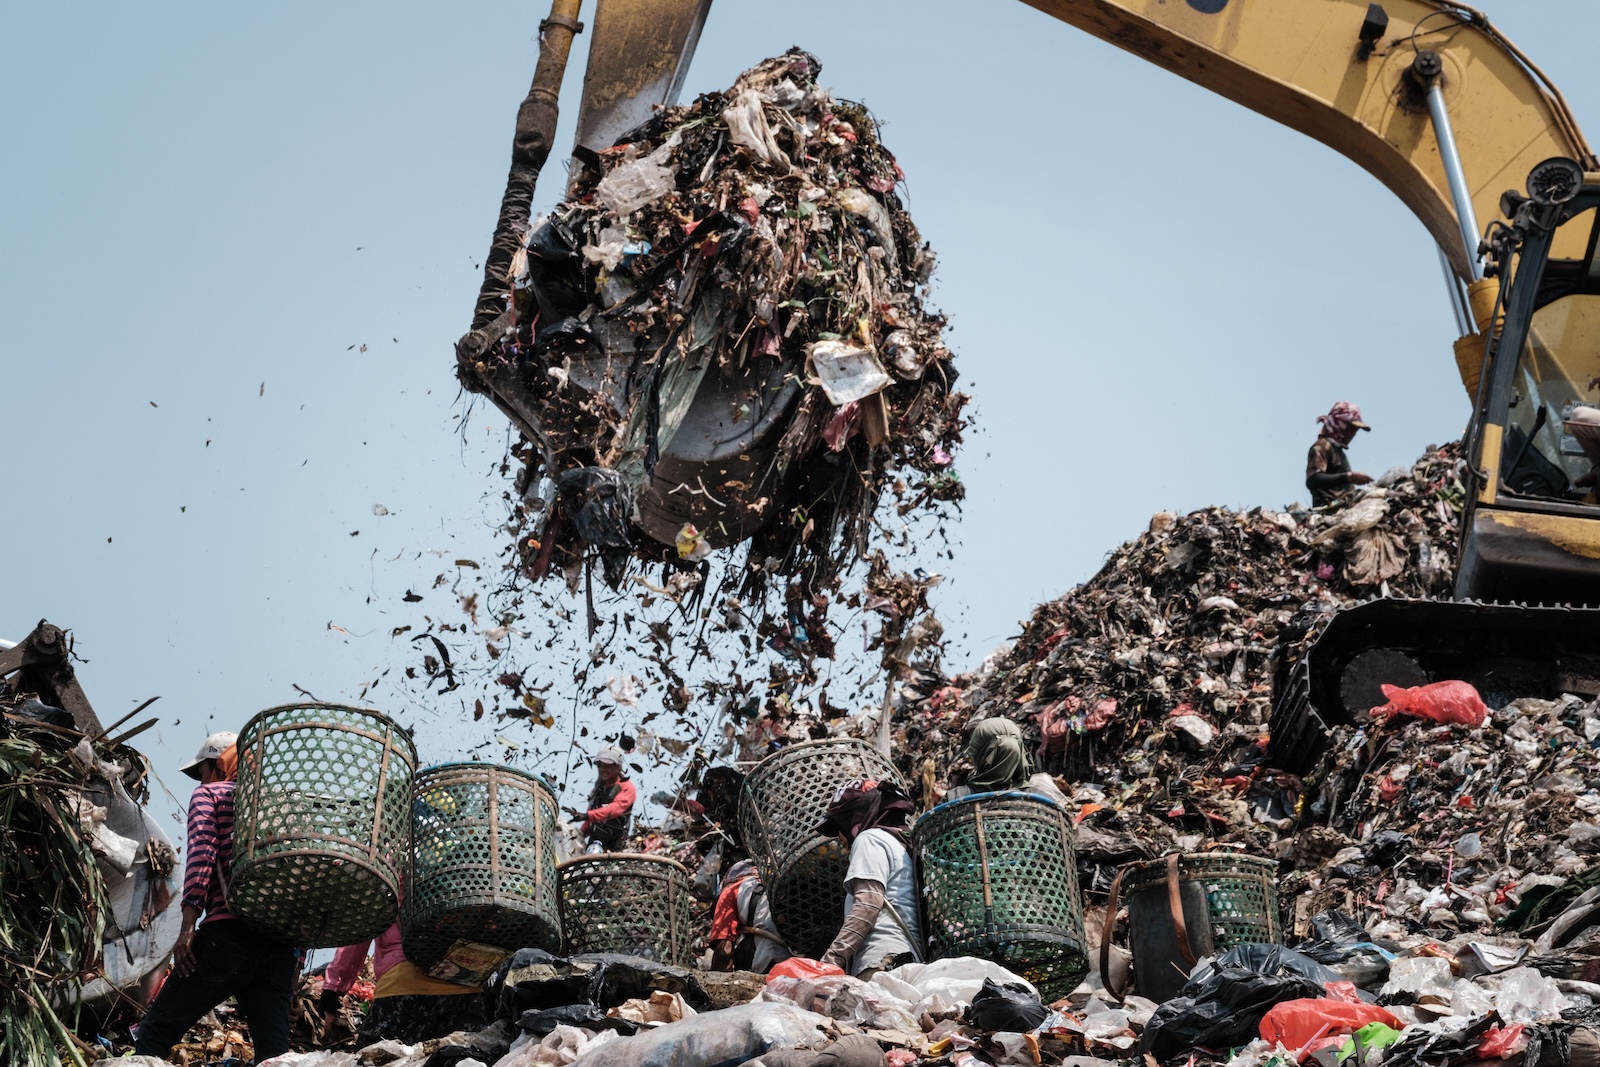 A crane lifts trash in a landfill